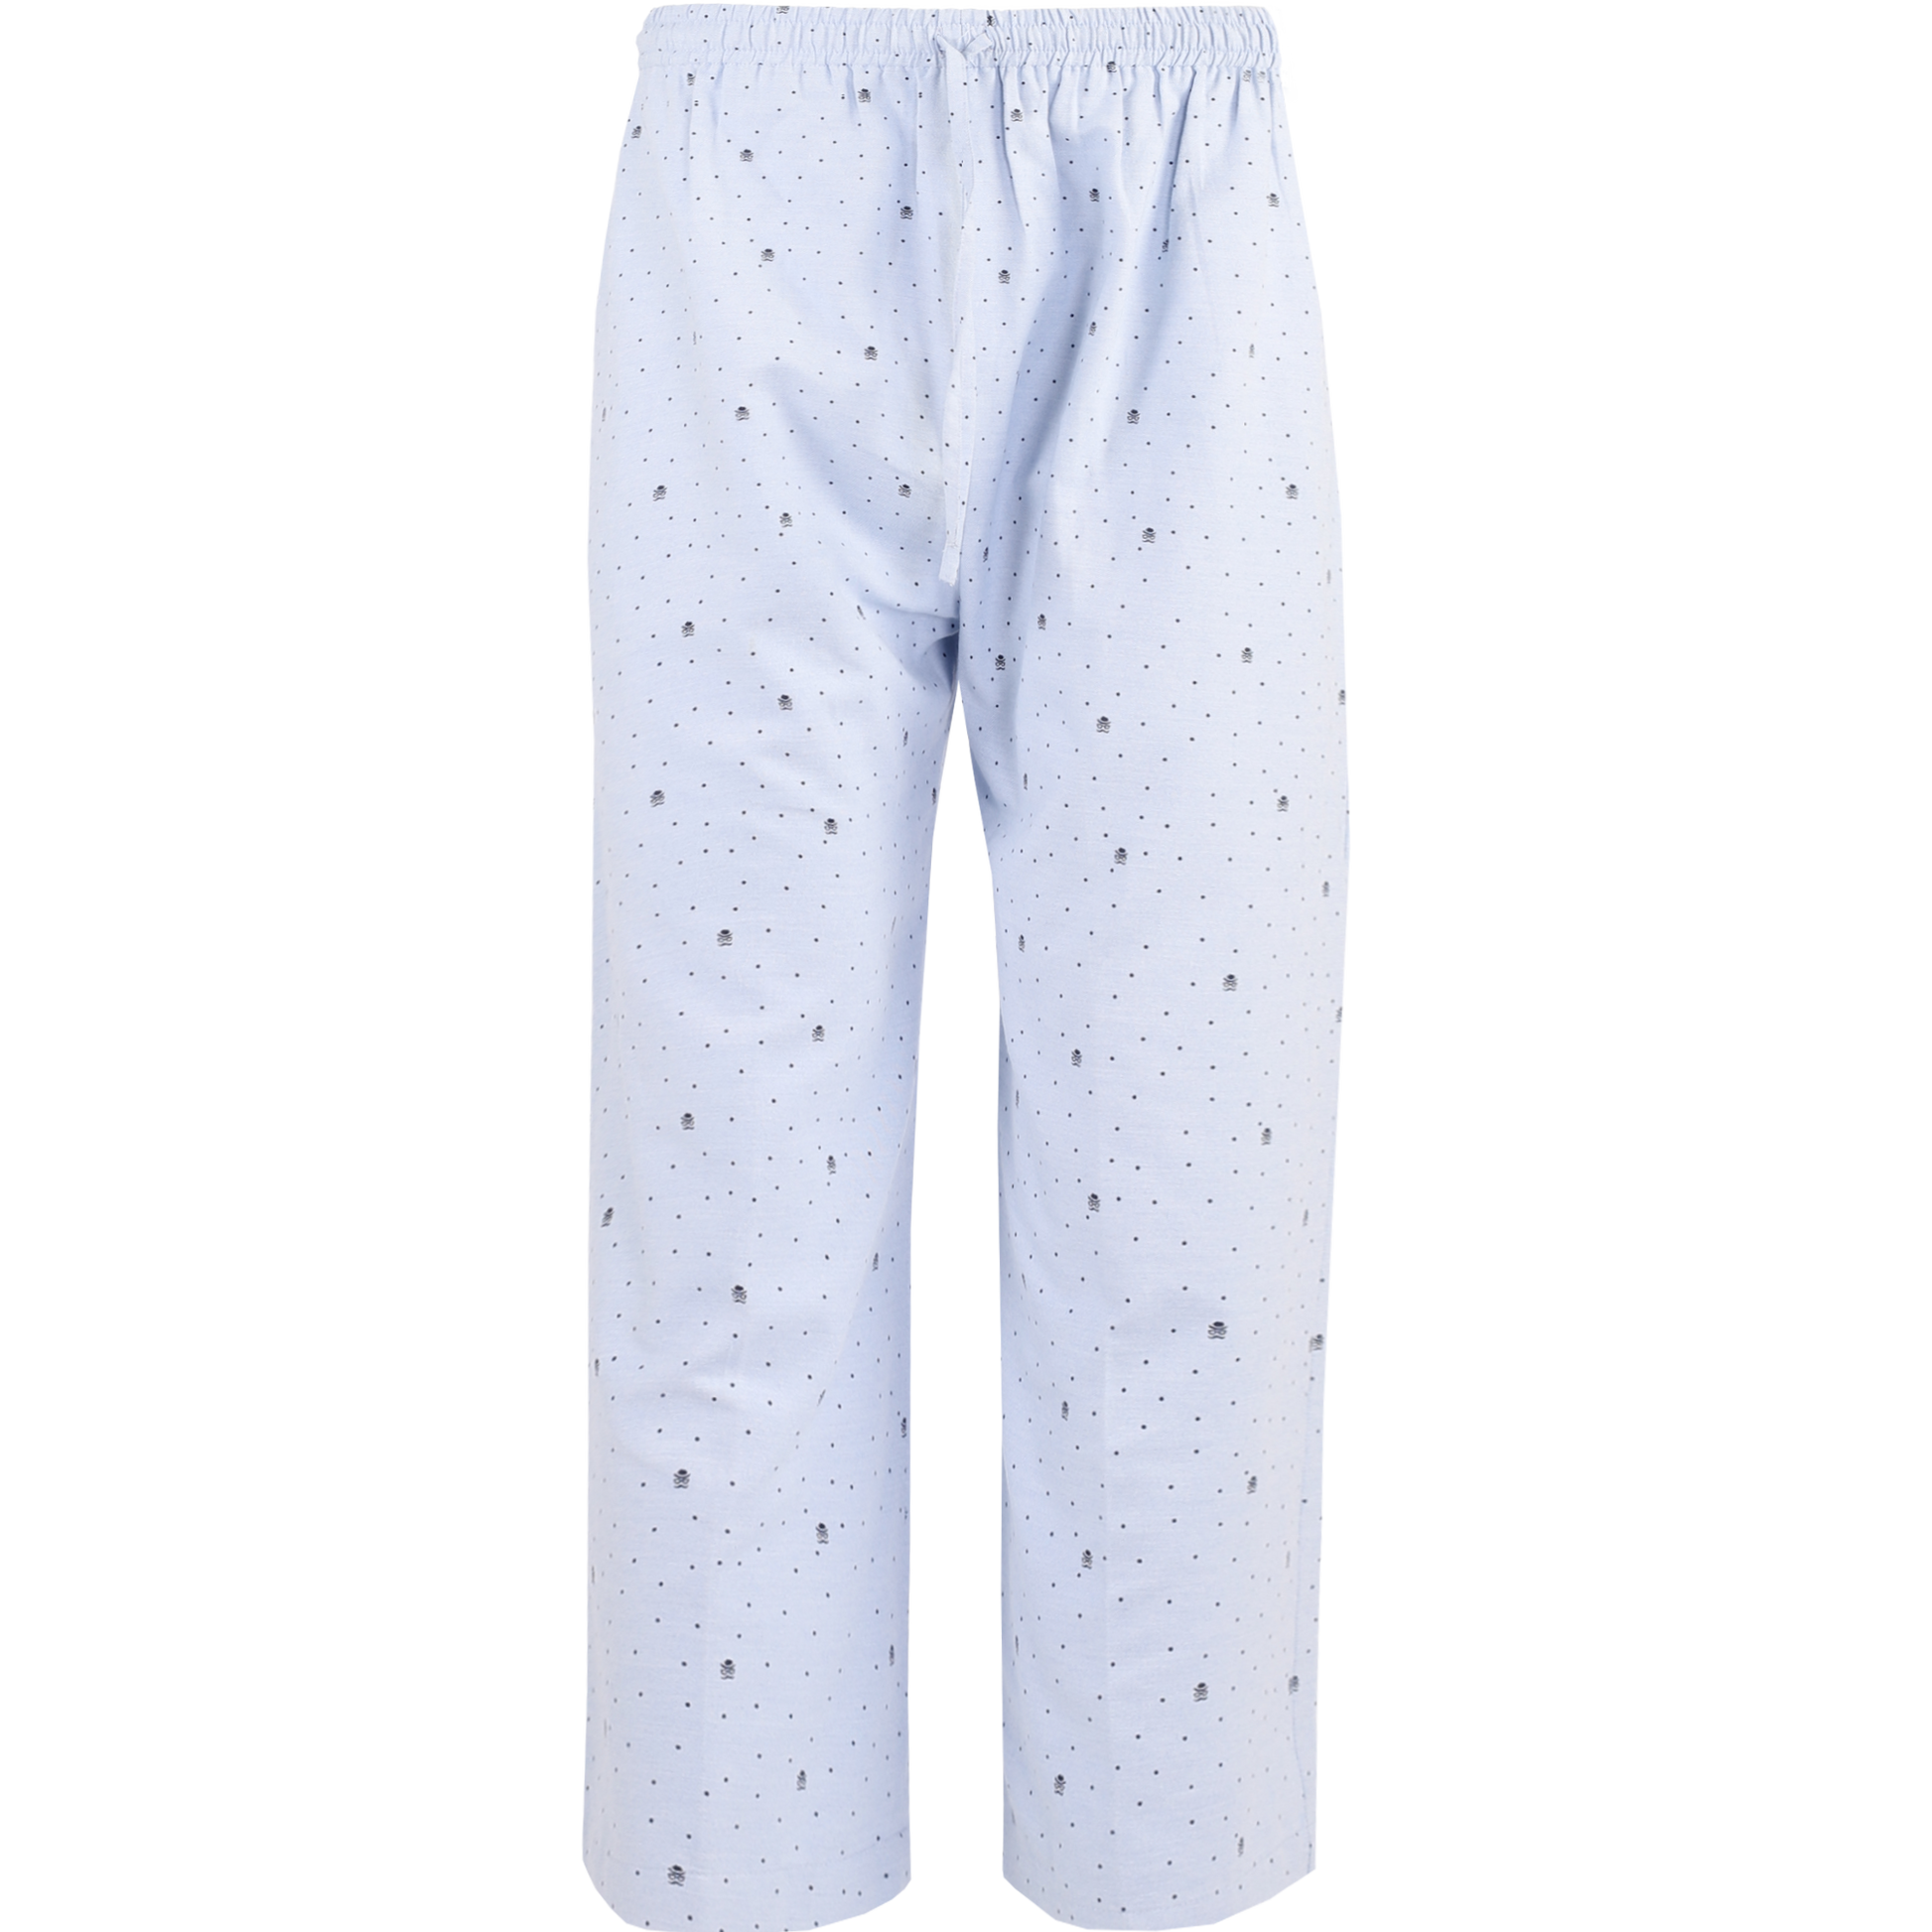 Blue Inpatient Pyjama Pants with Bowler Hat Print — Hospital & Nursing Home uniforms by CYC